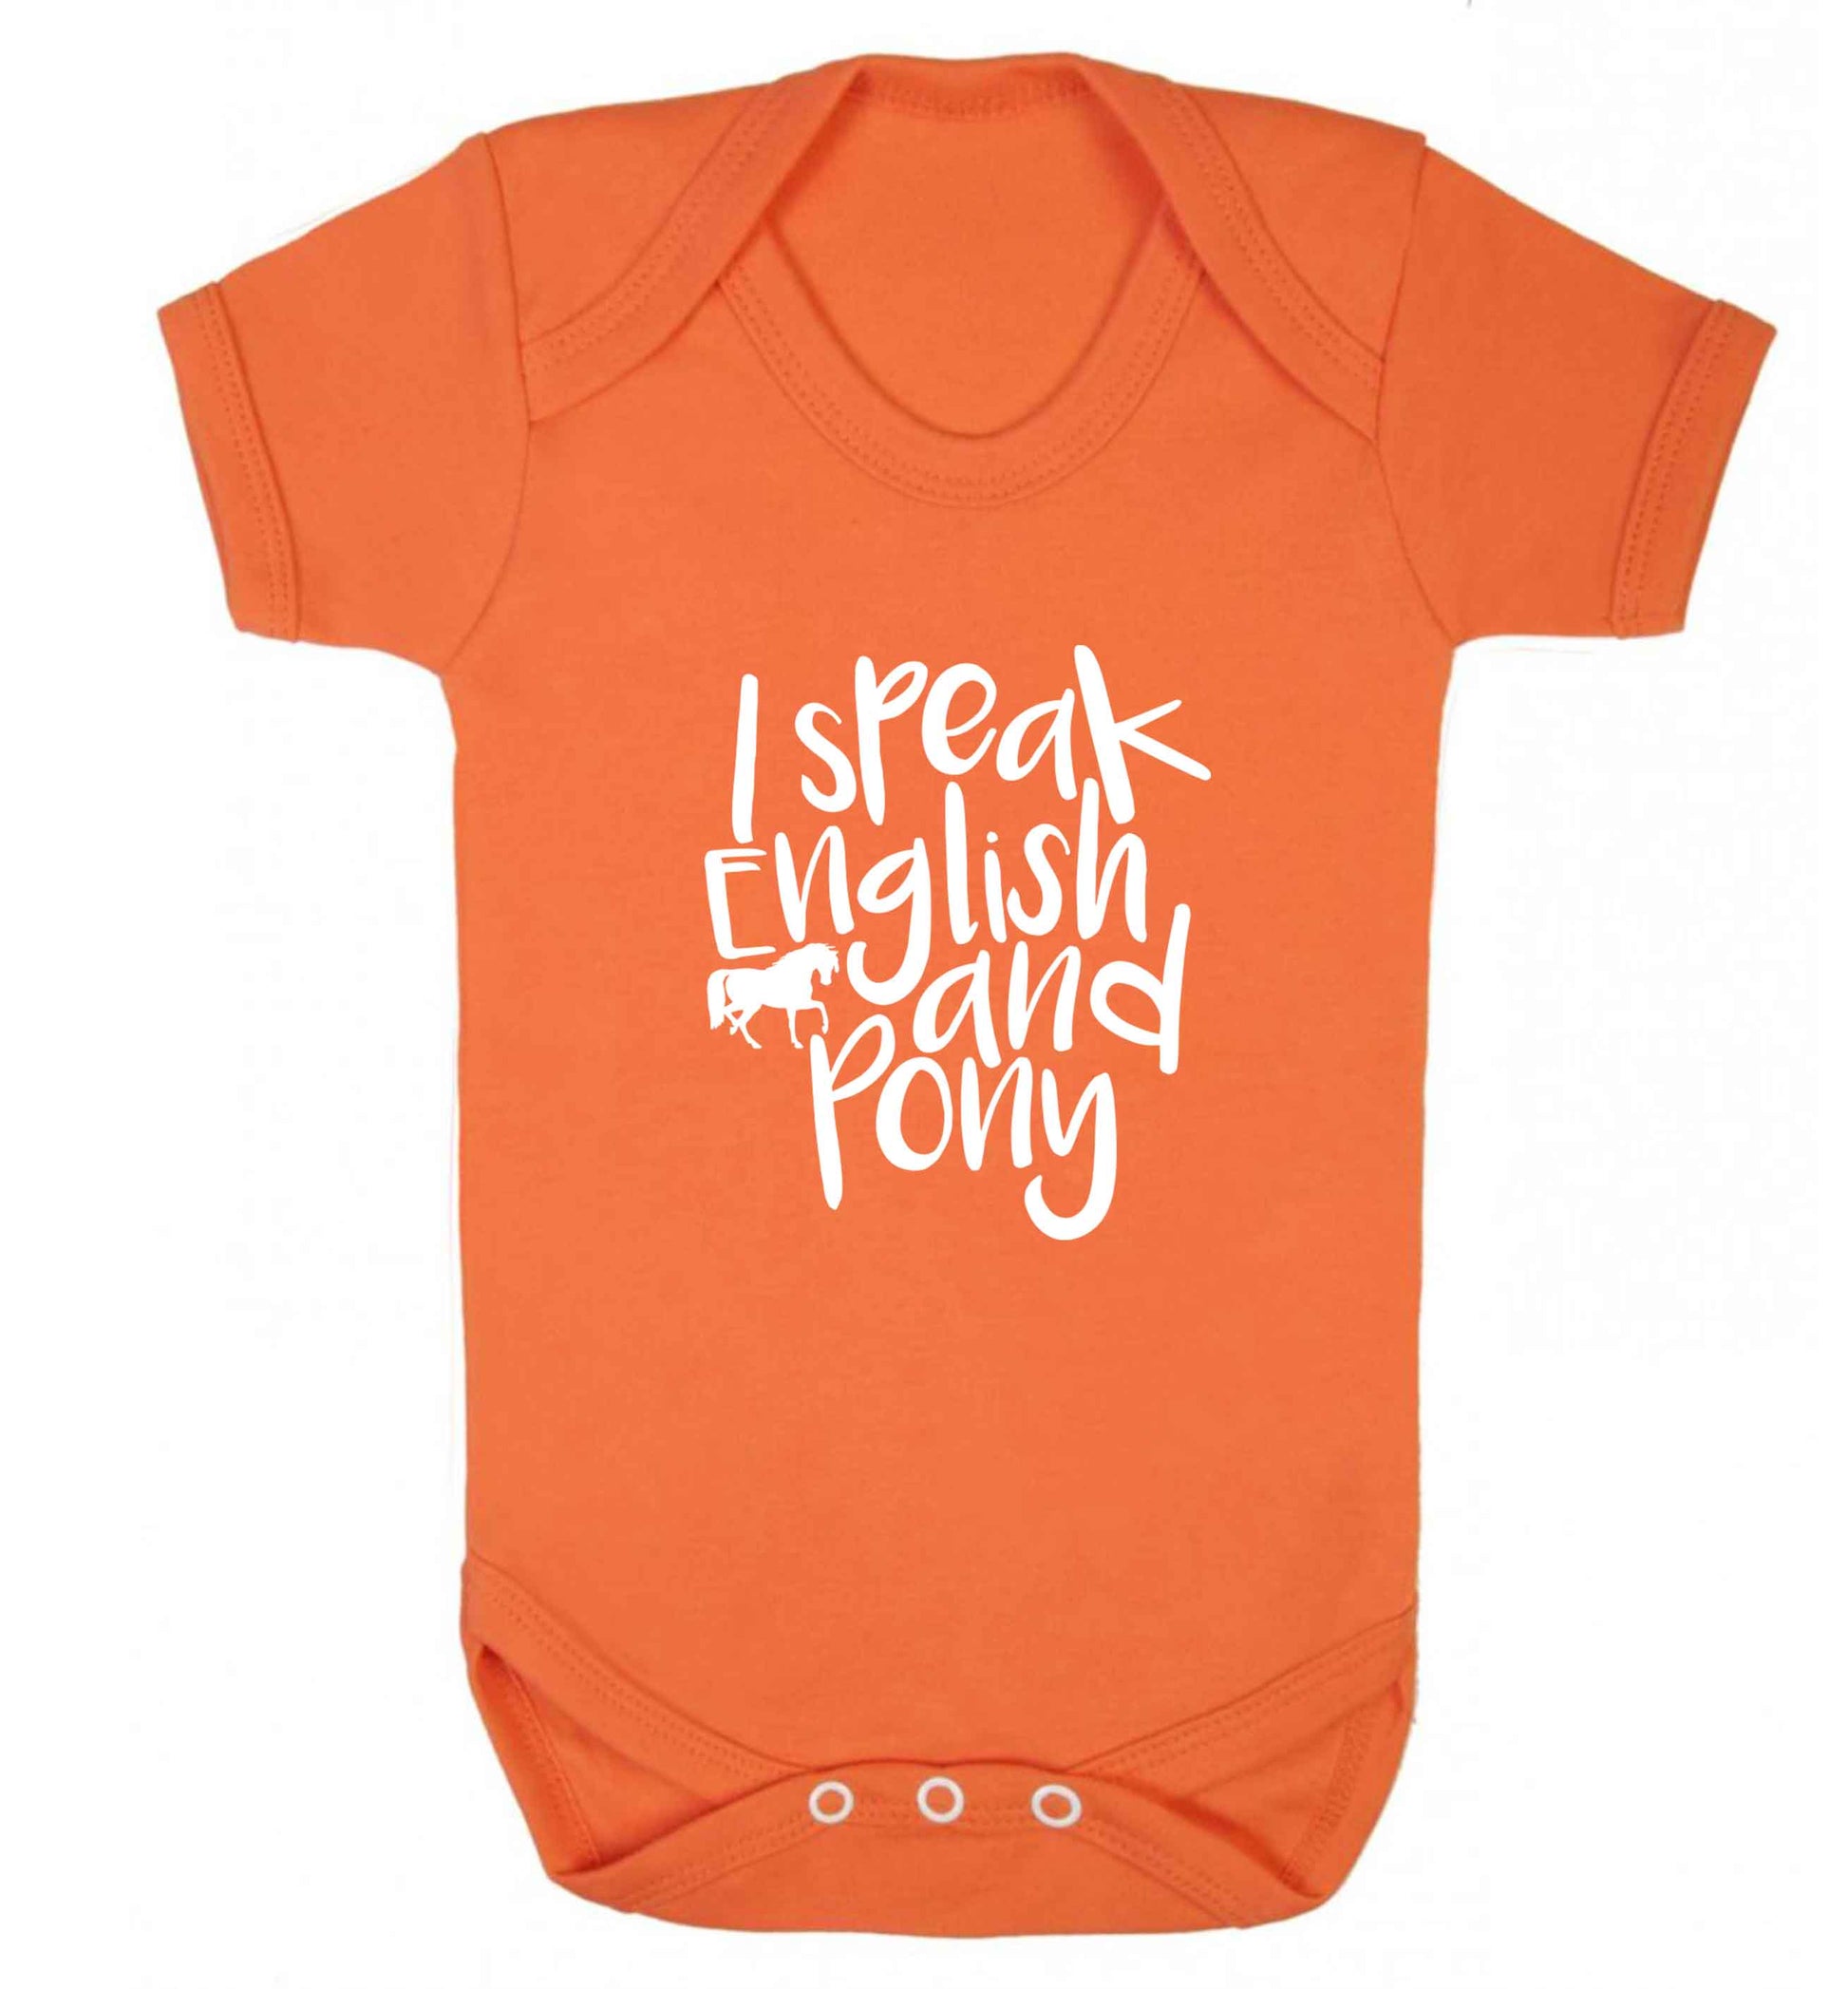 I speak English and pony baby vest orange 18-24 months